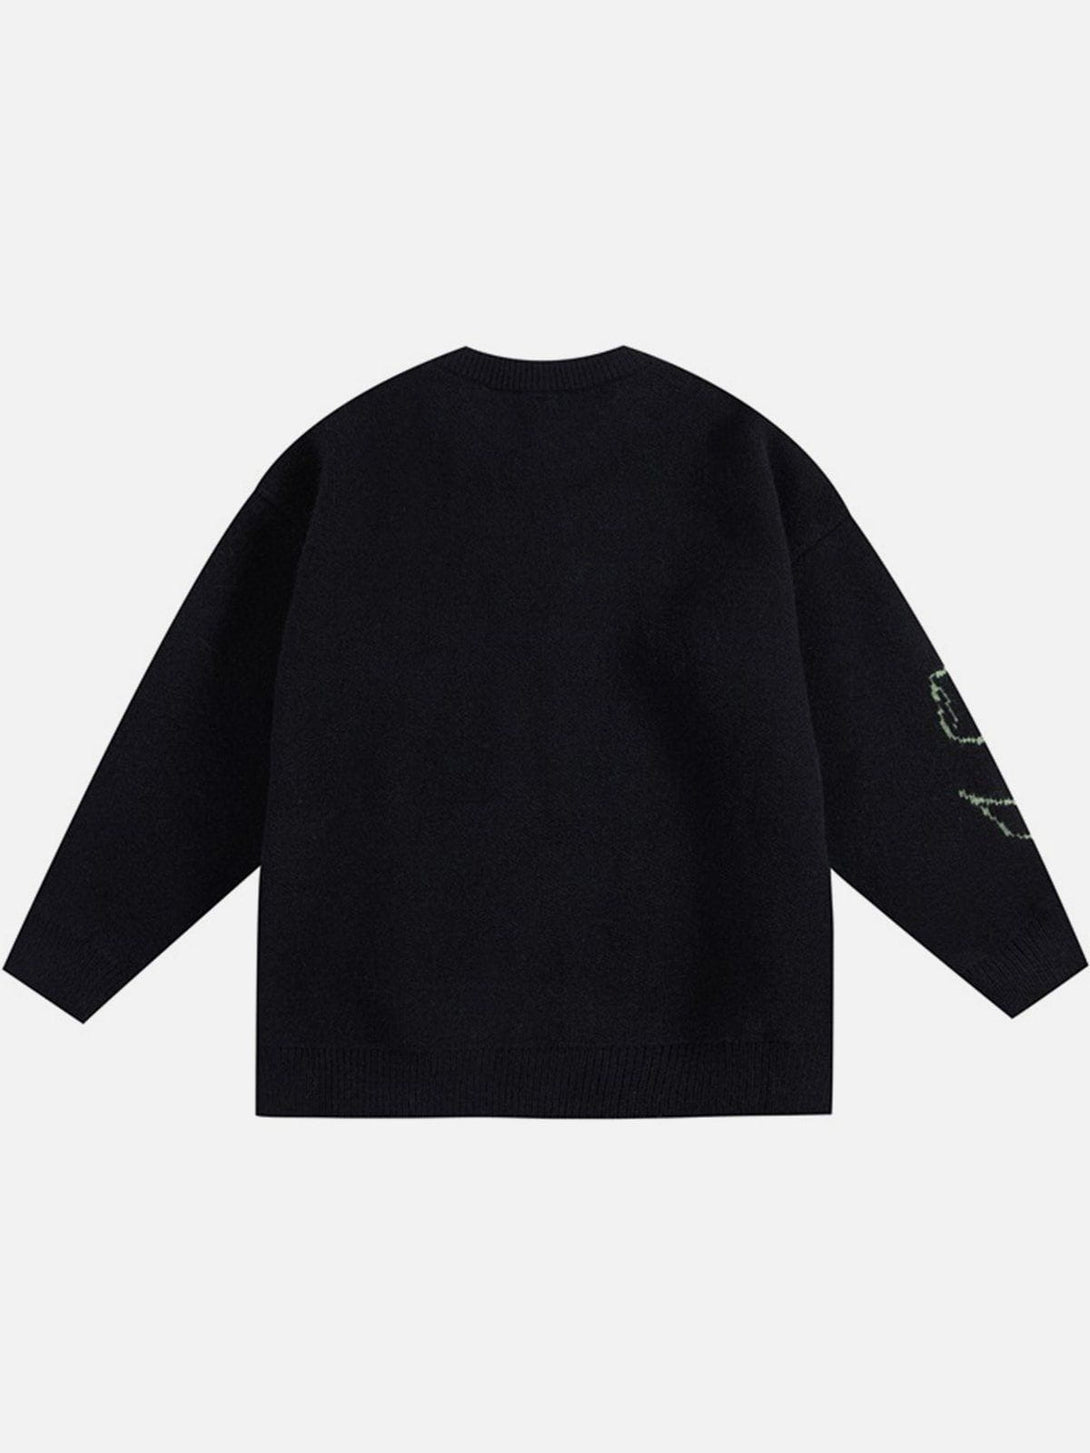 AlanBalen® - Abstract Line Design Sweater AlanBalen